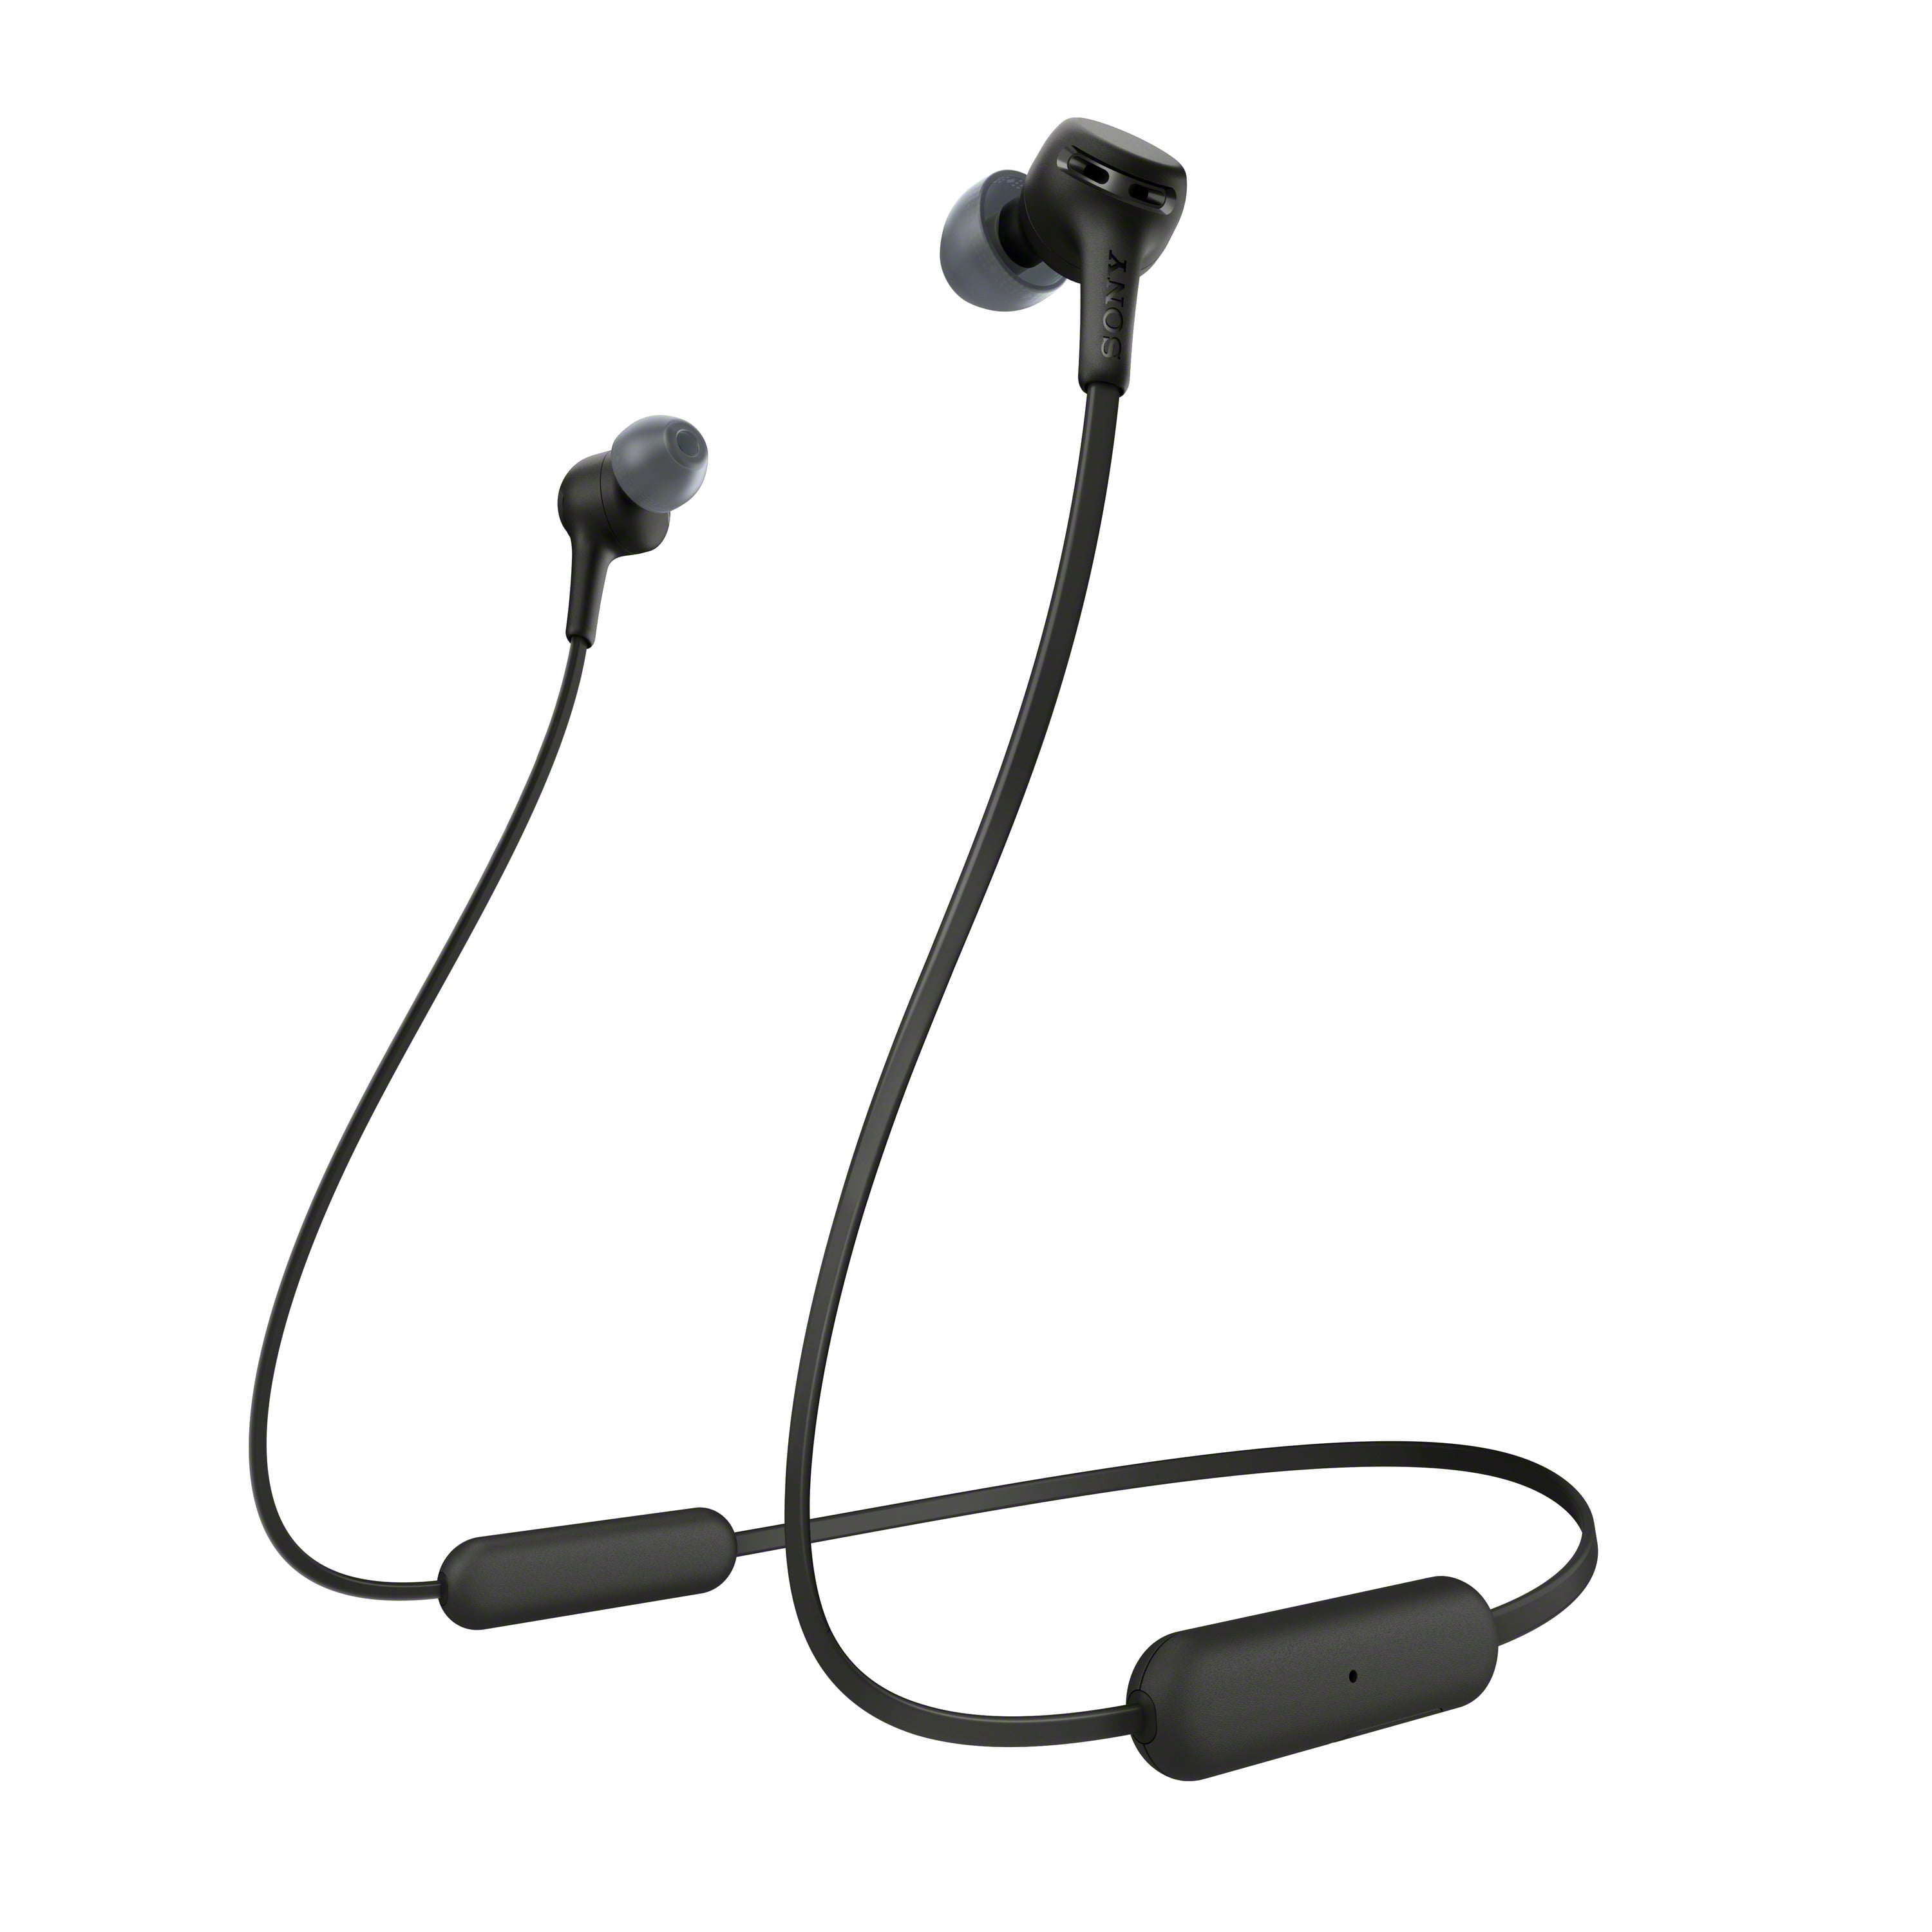 Sony Wireless In-Ear Headphones with Microphone - Black